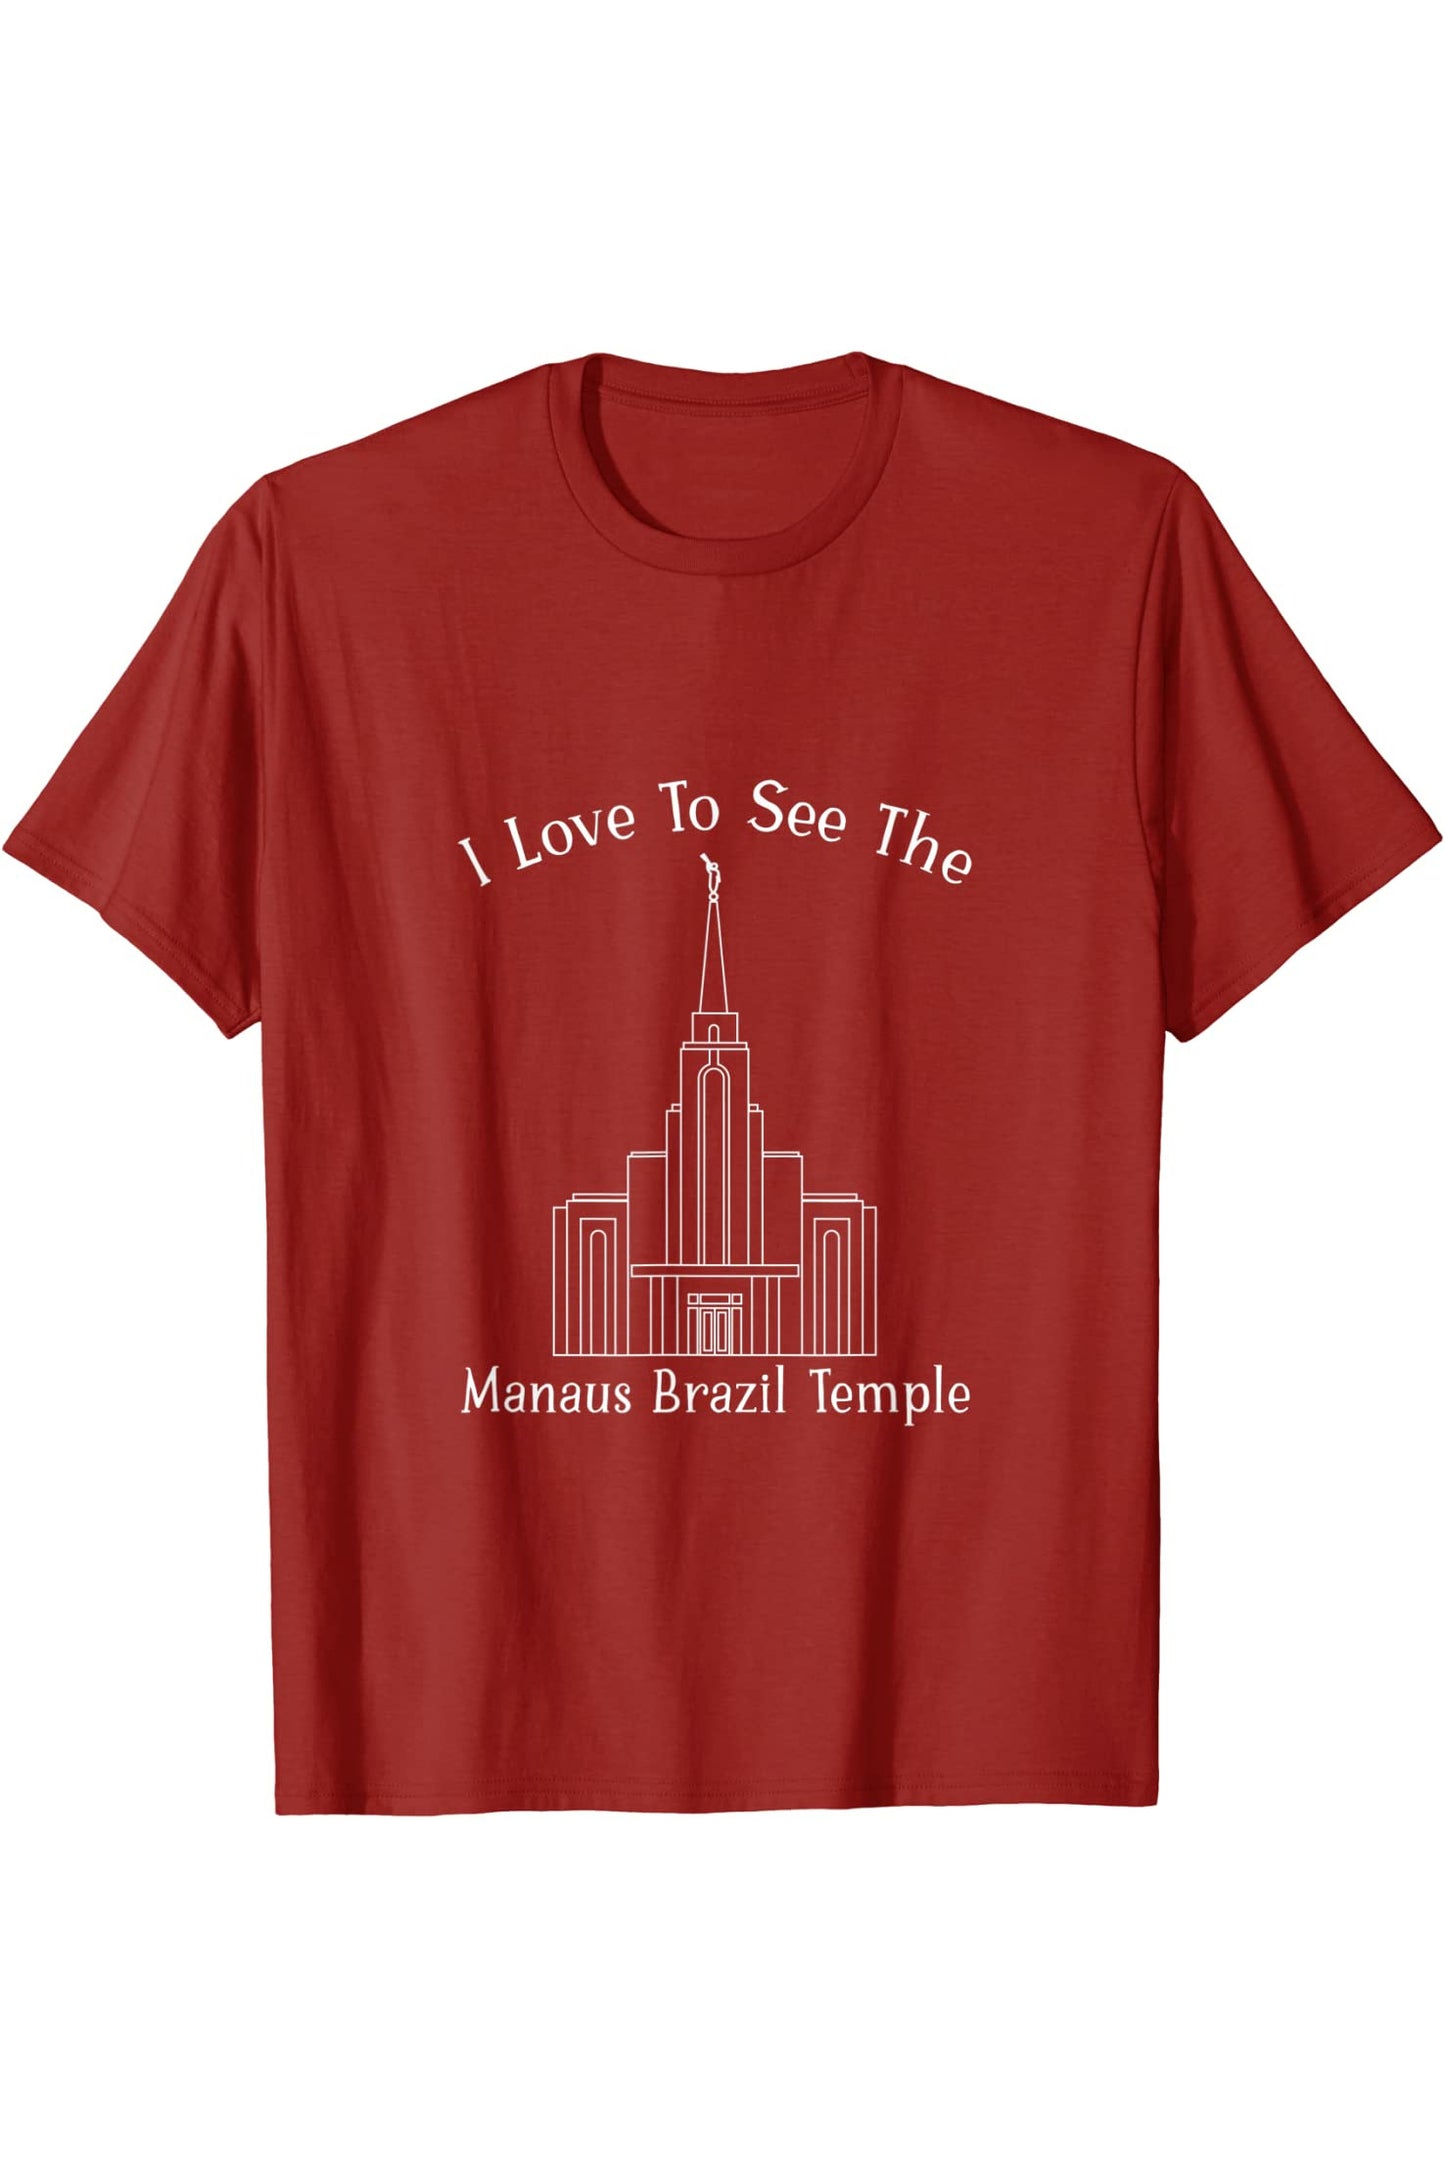 Manaus Brazil Temple T-Shirt - Happy Style (English) US